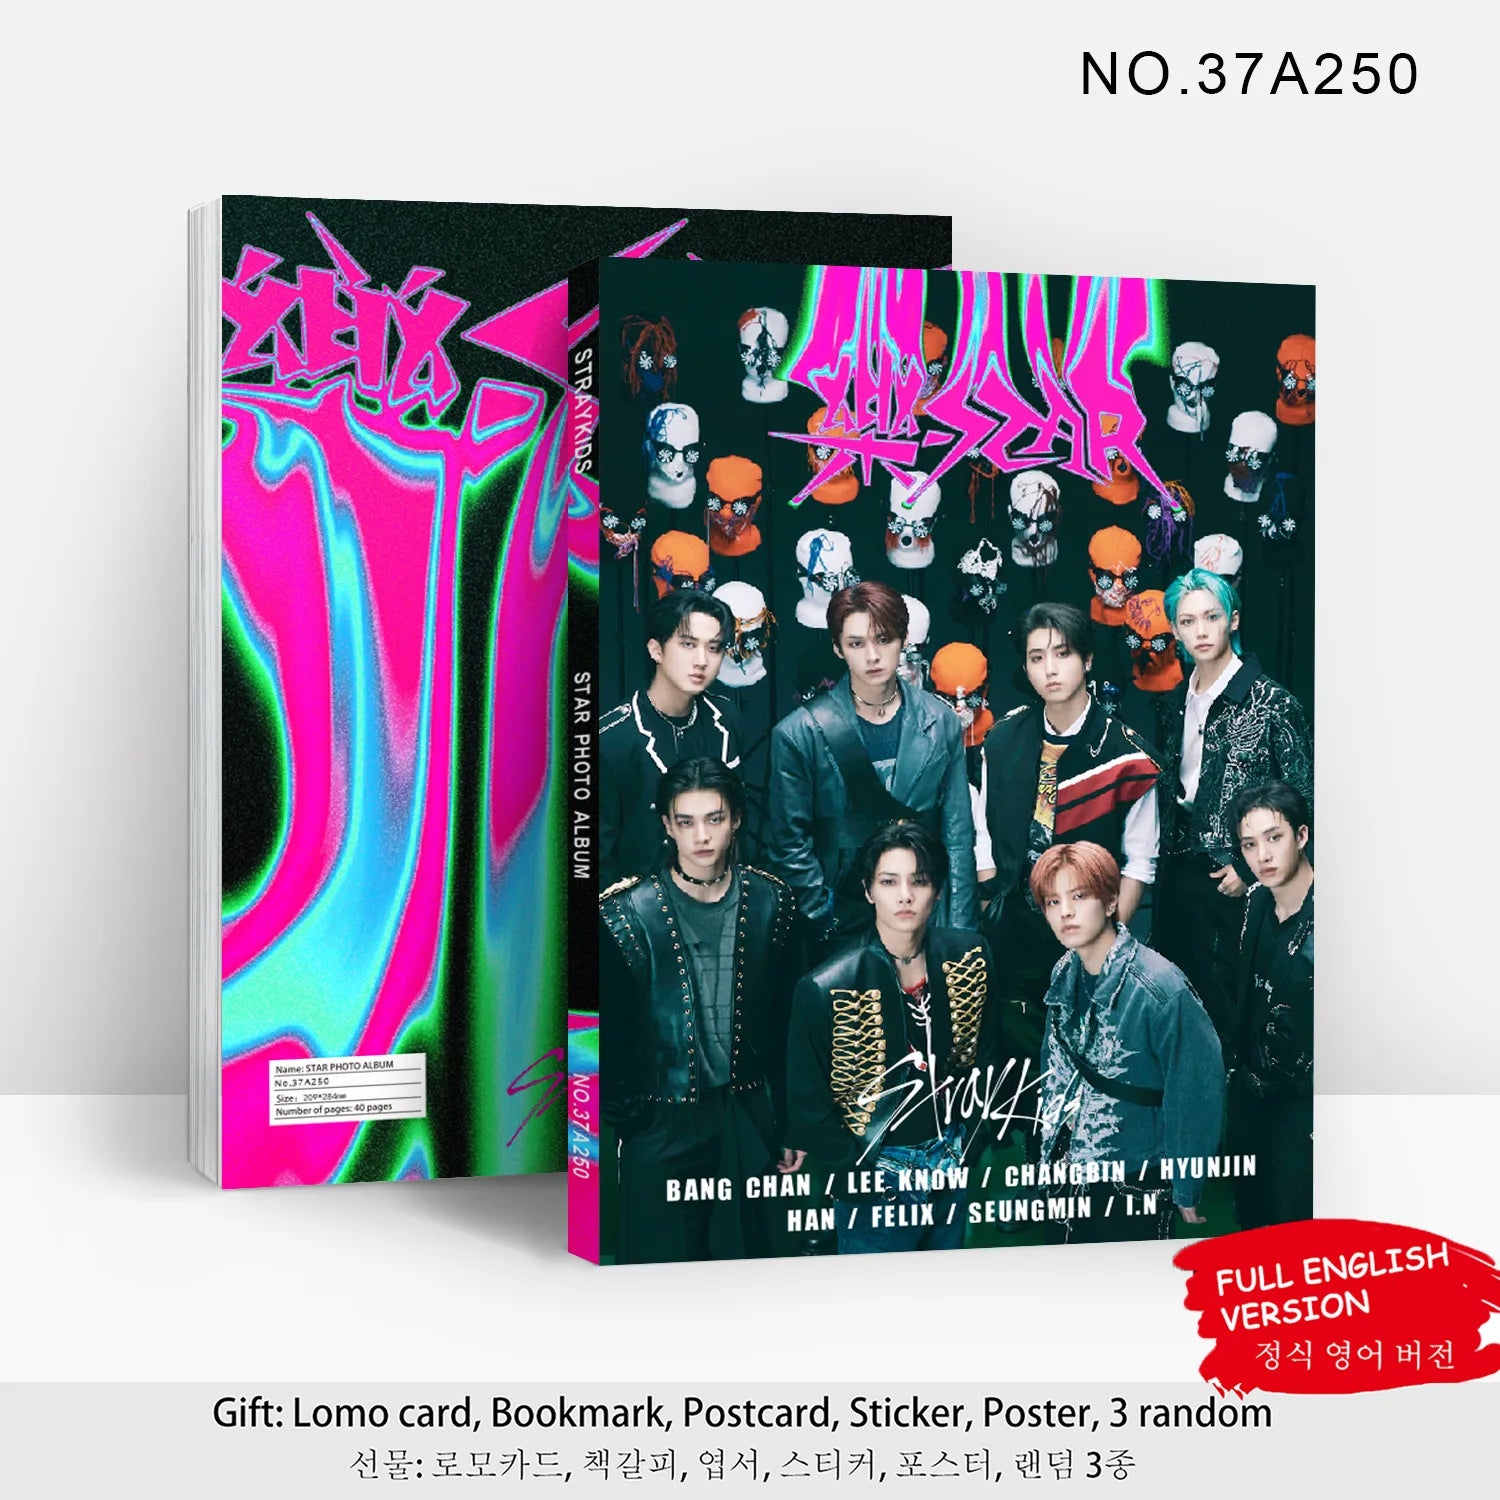 Stray Kids Rock-Star Photoalbum/Magazine